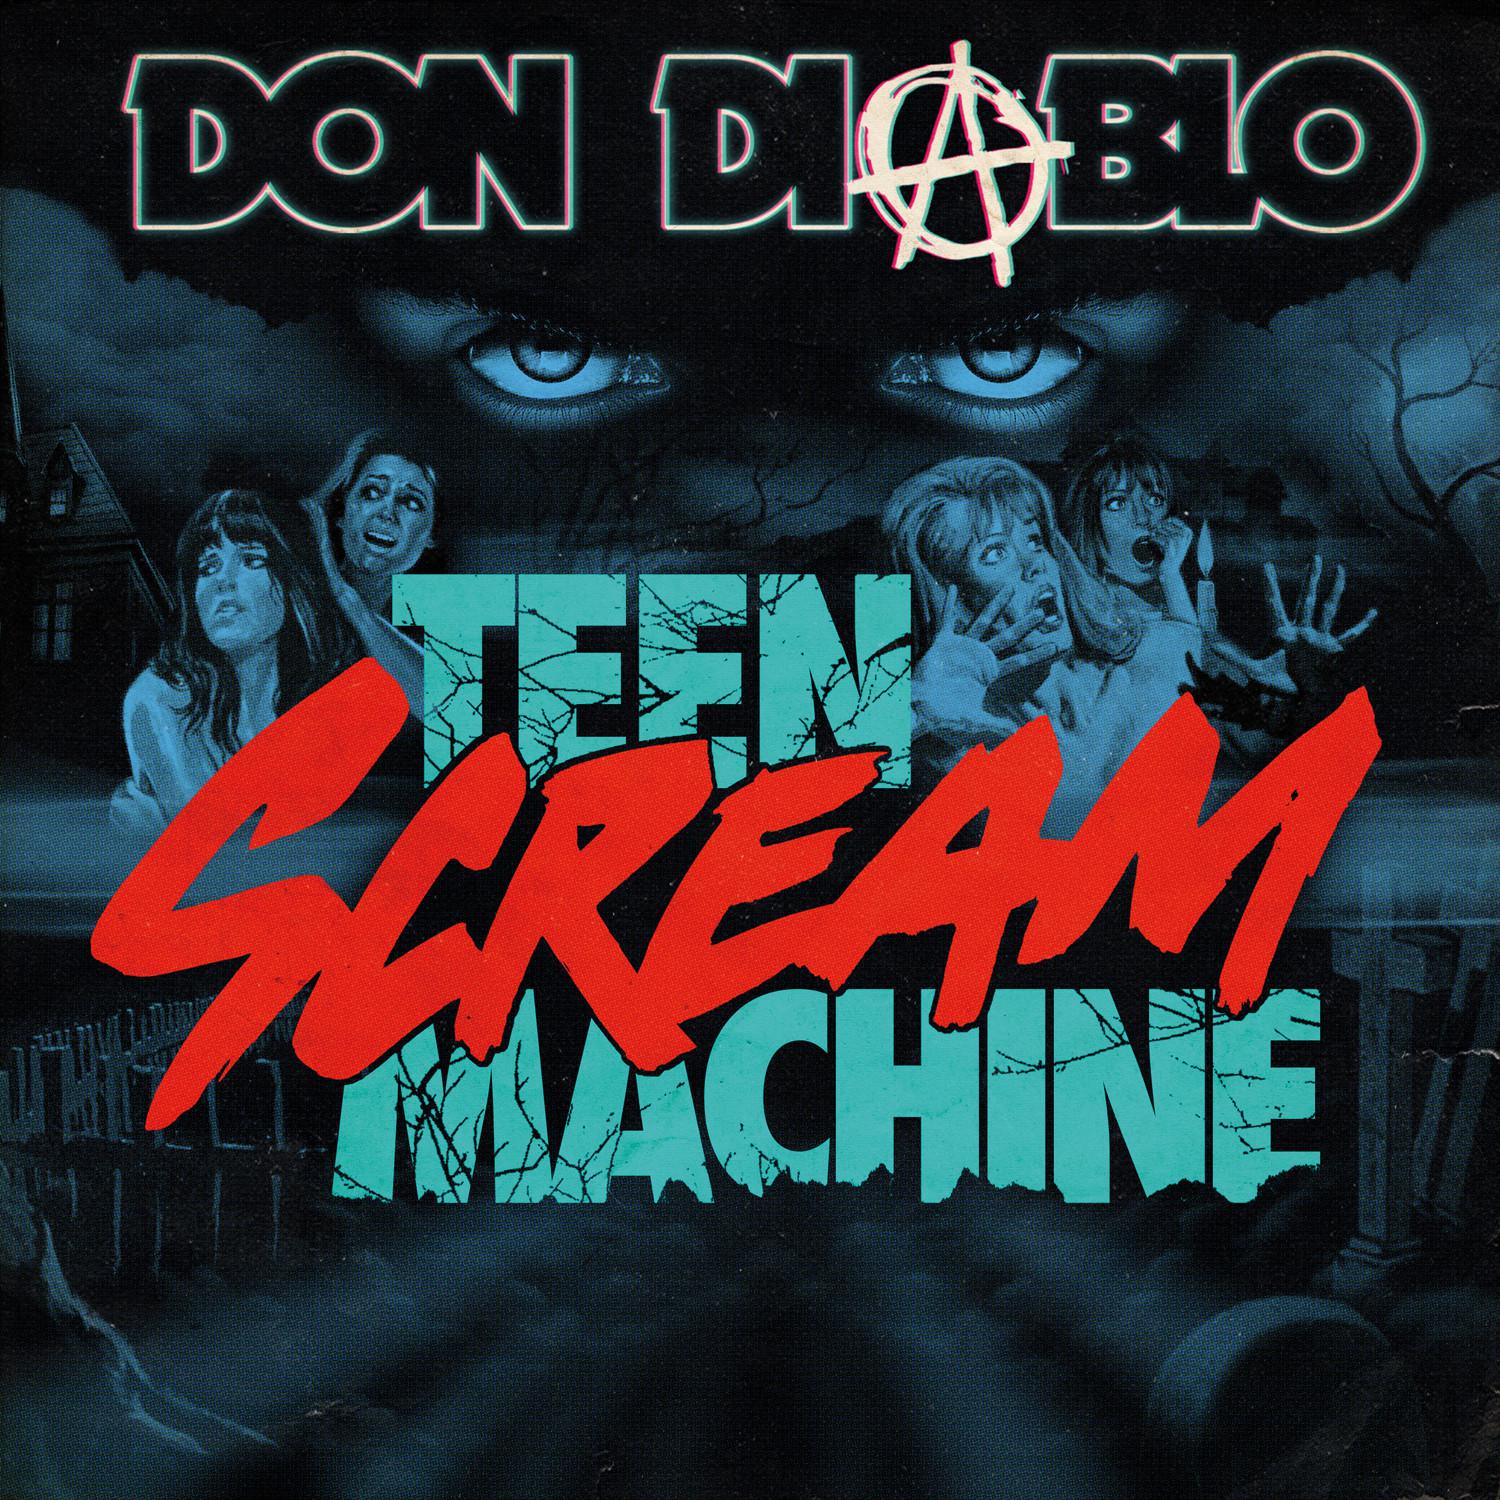 Teen Scream Machine